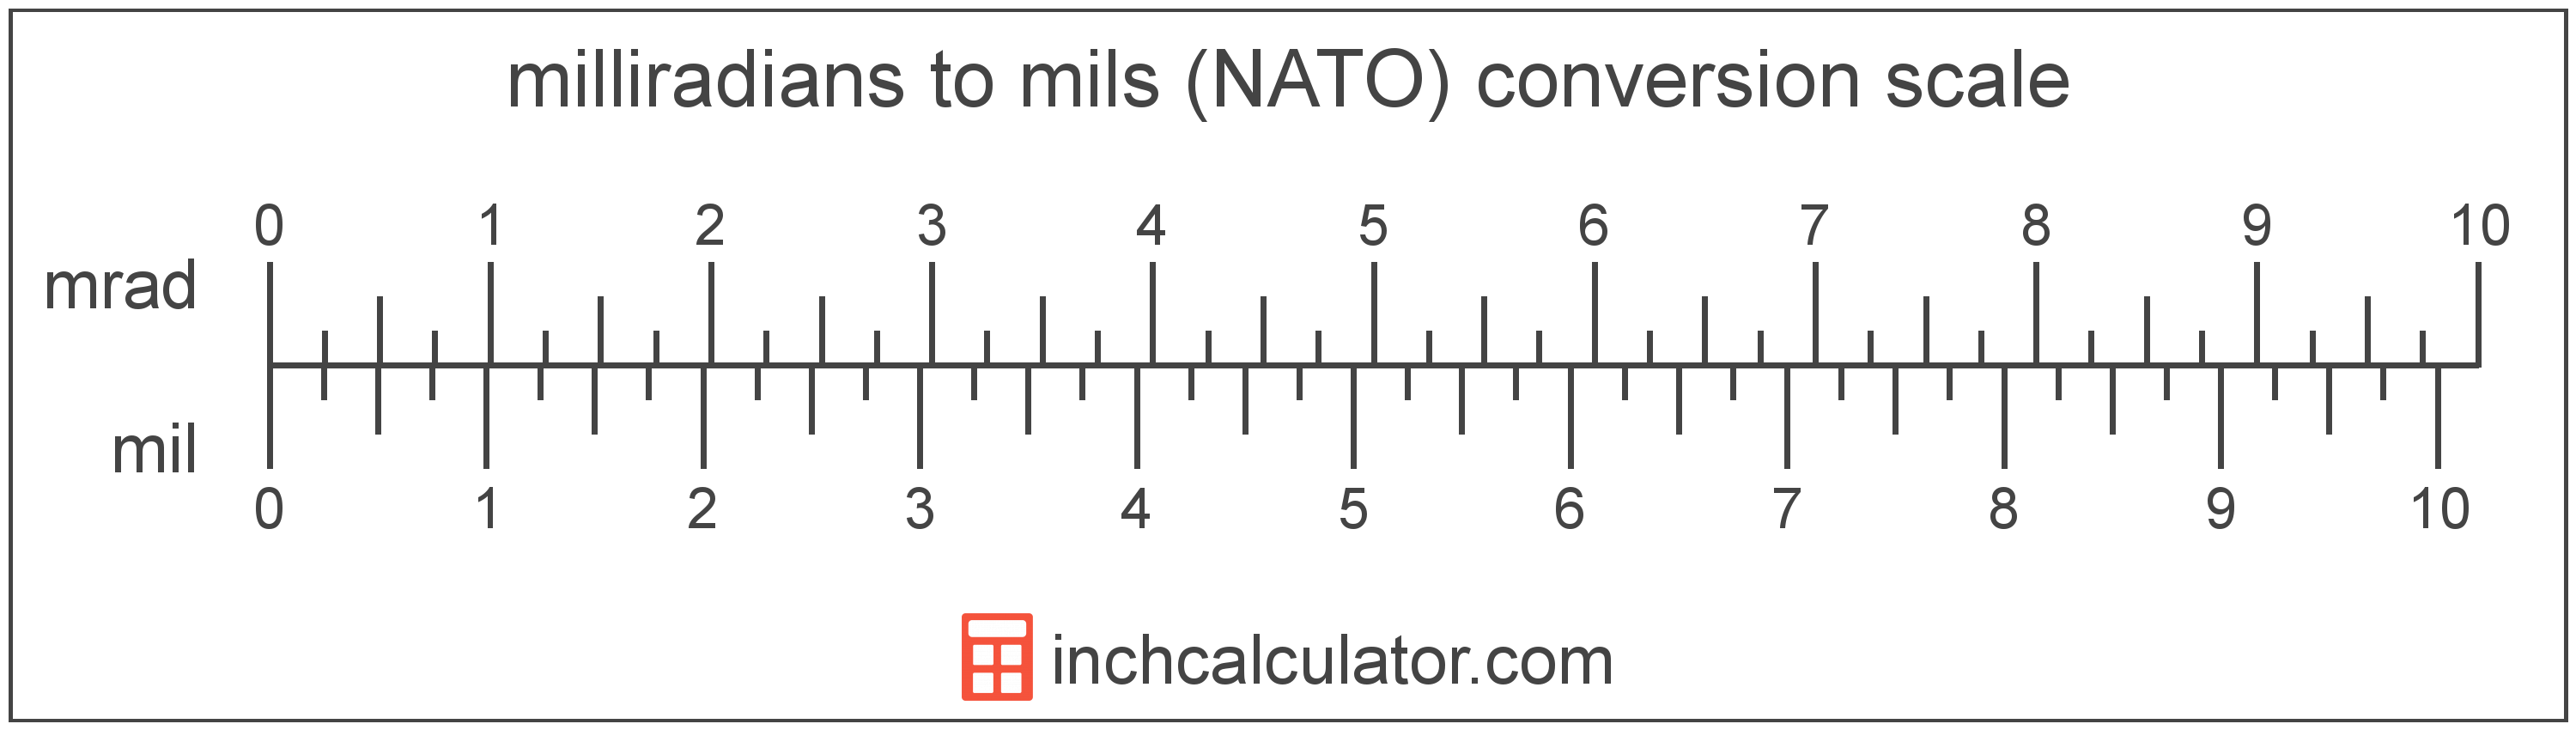 milliradians-to-mils-nato-conversion-mrad-to-mil